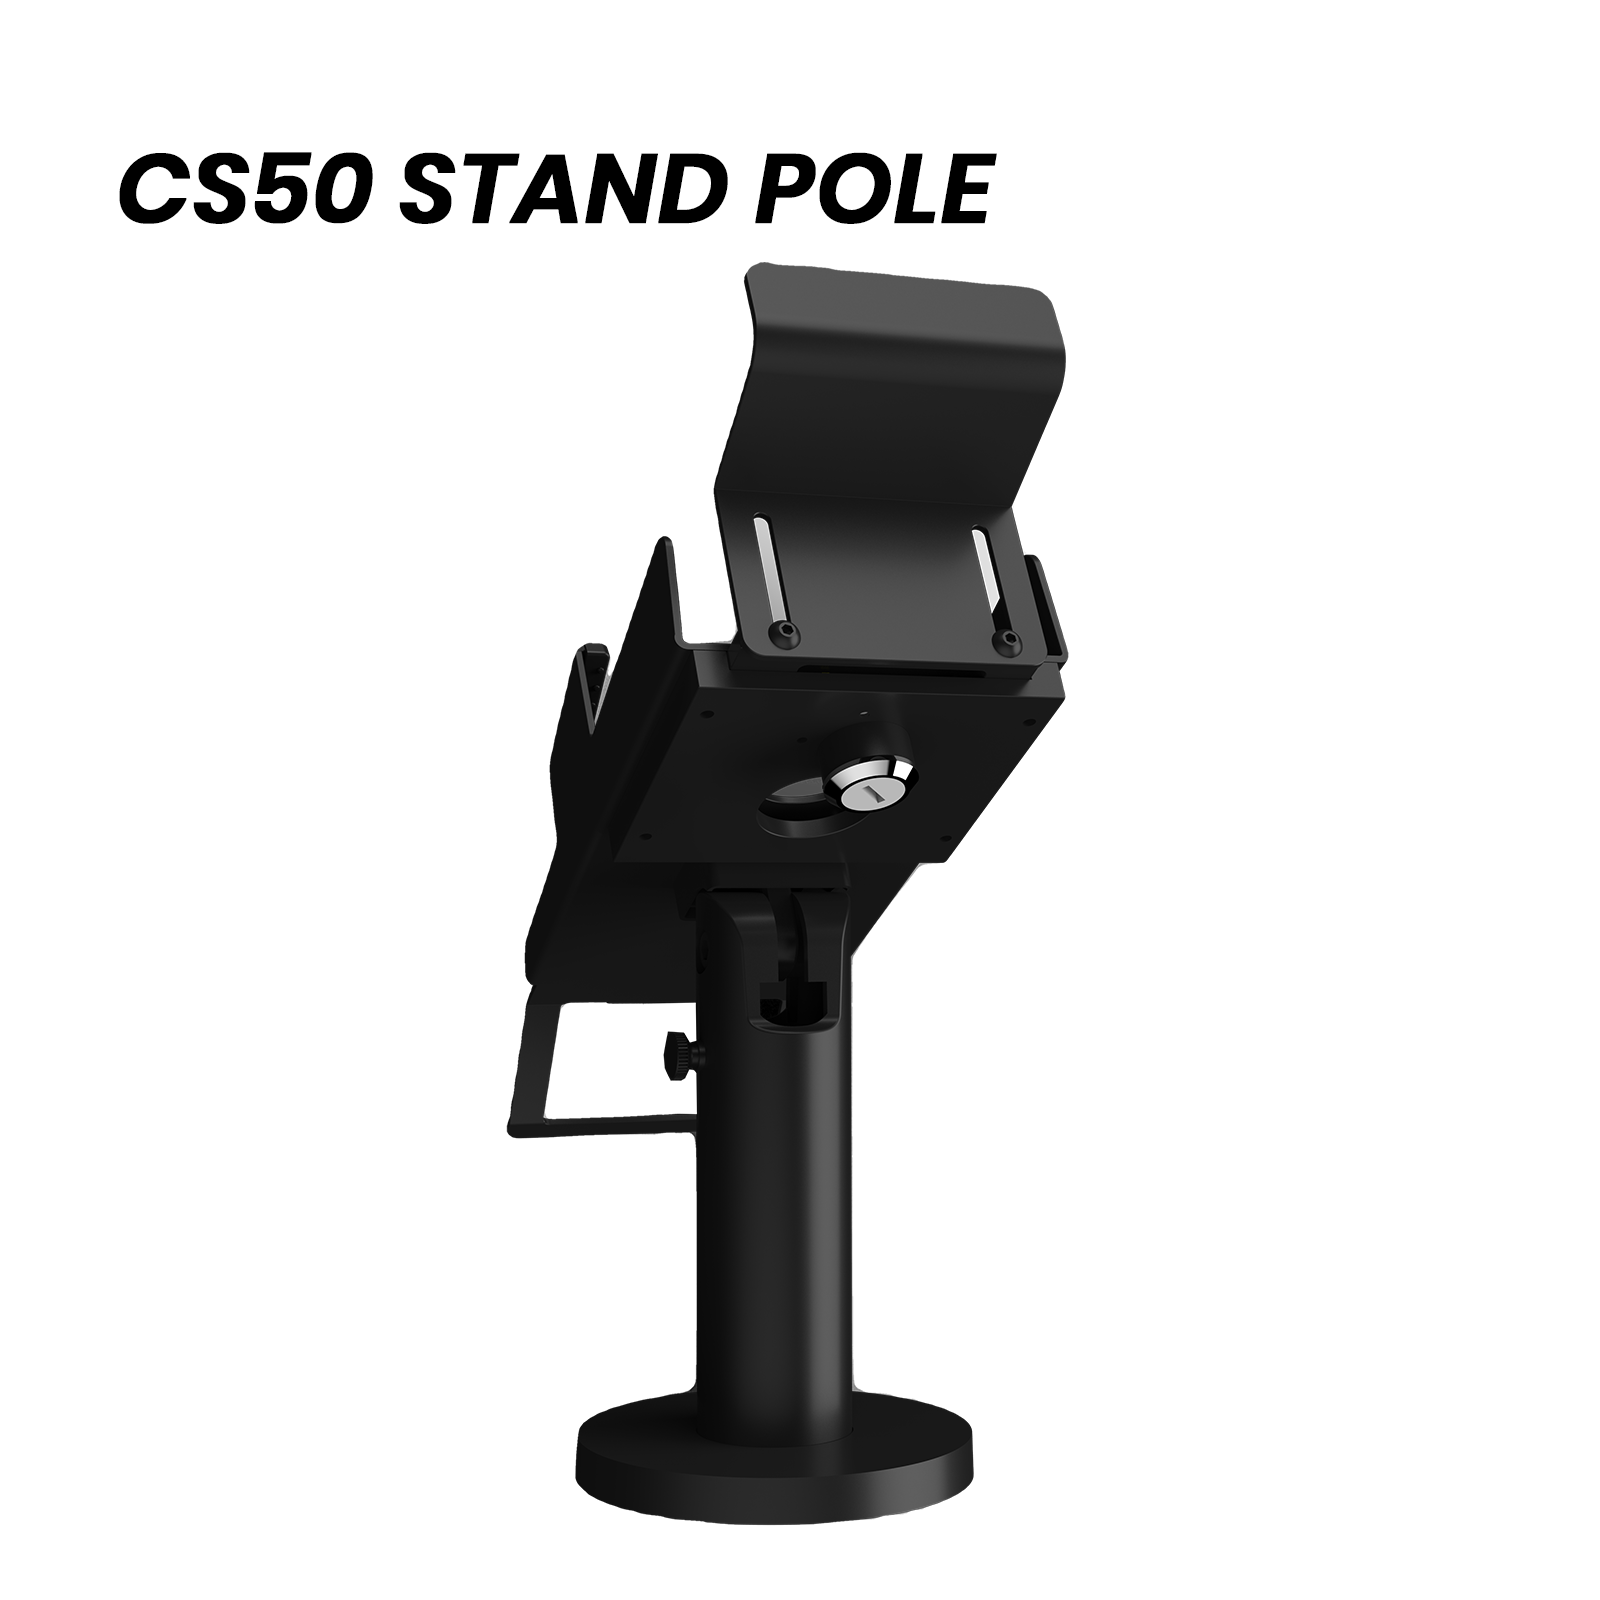 Peripherals For CS50|Smart POS Cradle|POS Stand Pole|CIONTEK